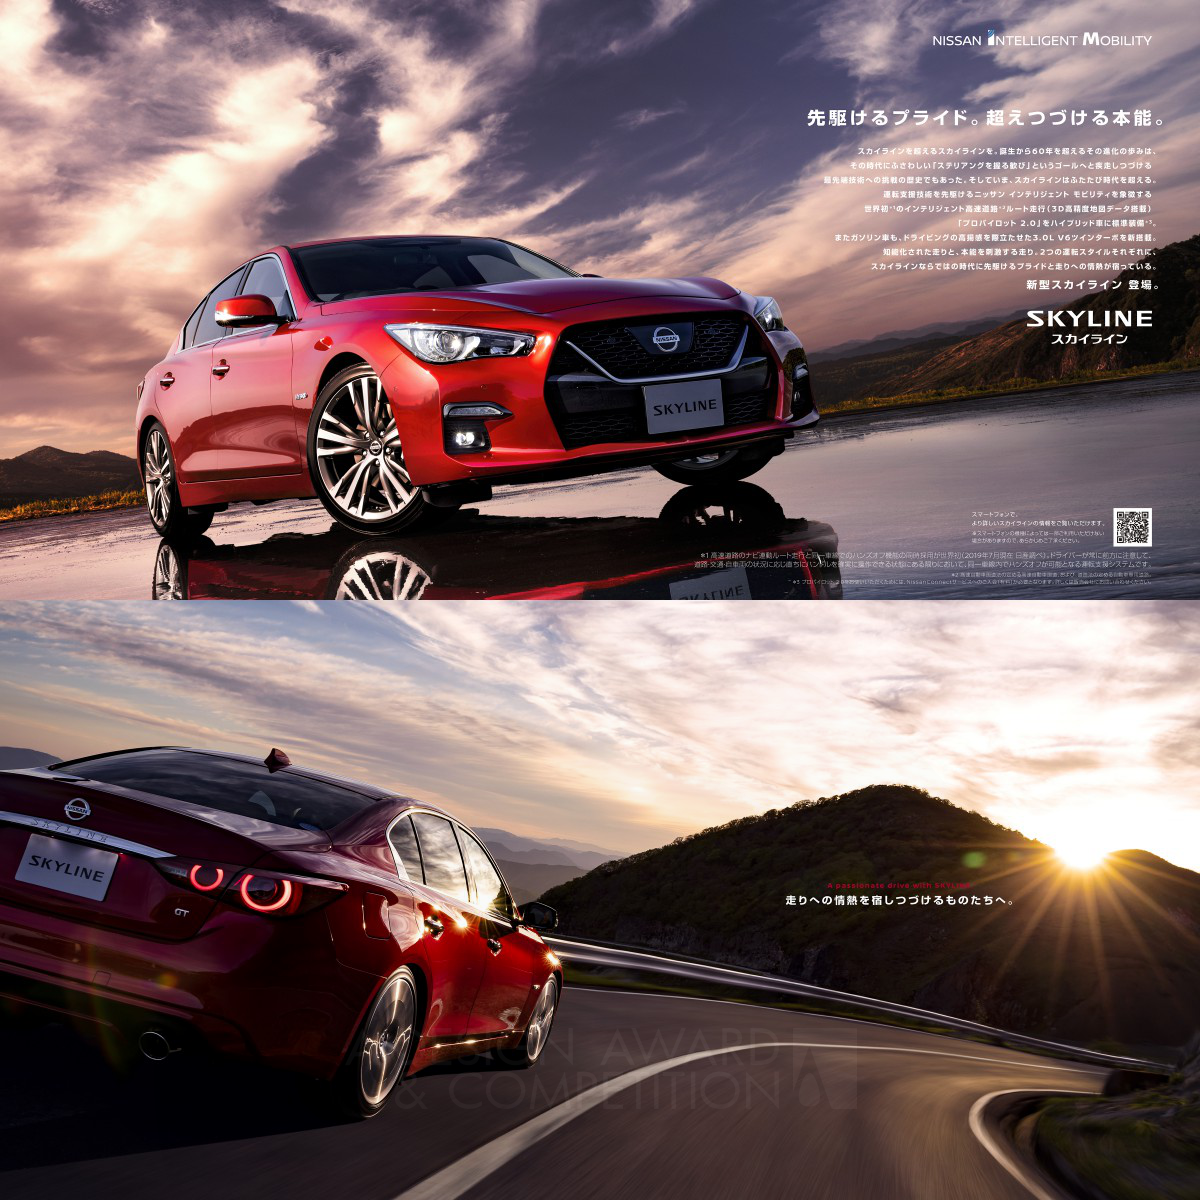 Nissan Skyline Brochure by E-graphics communications